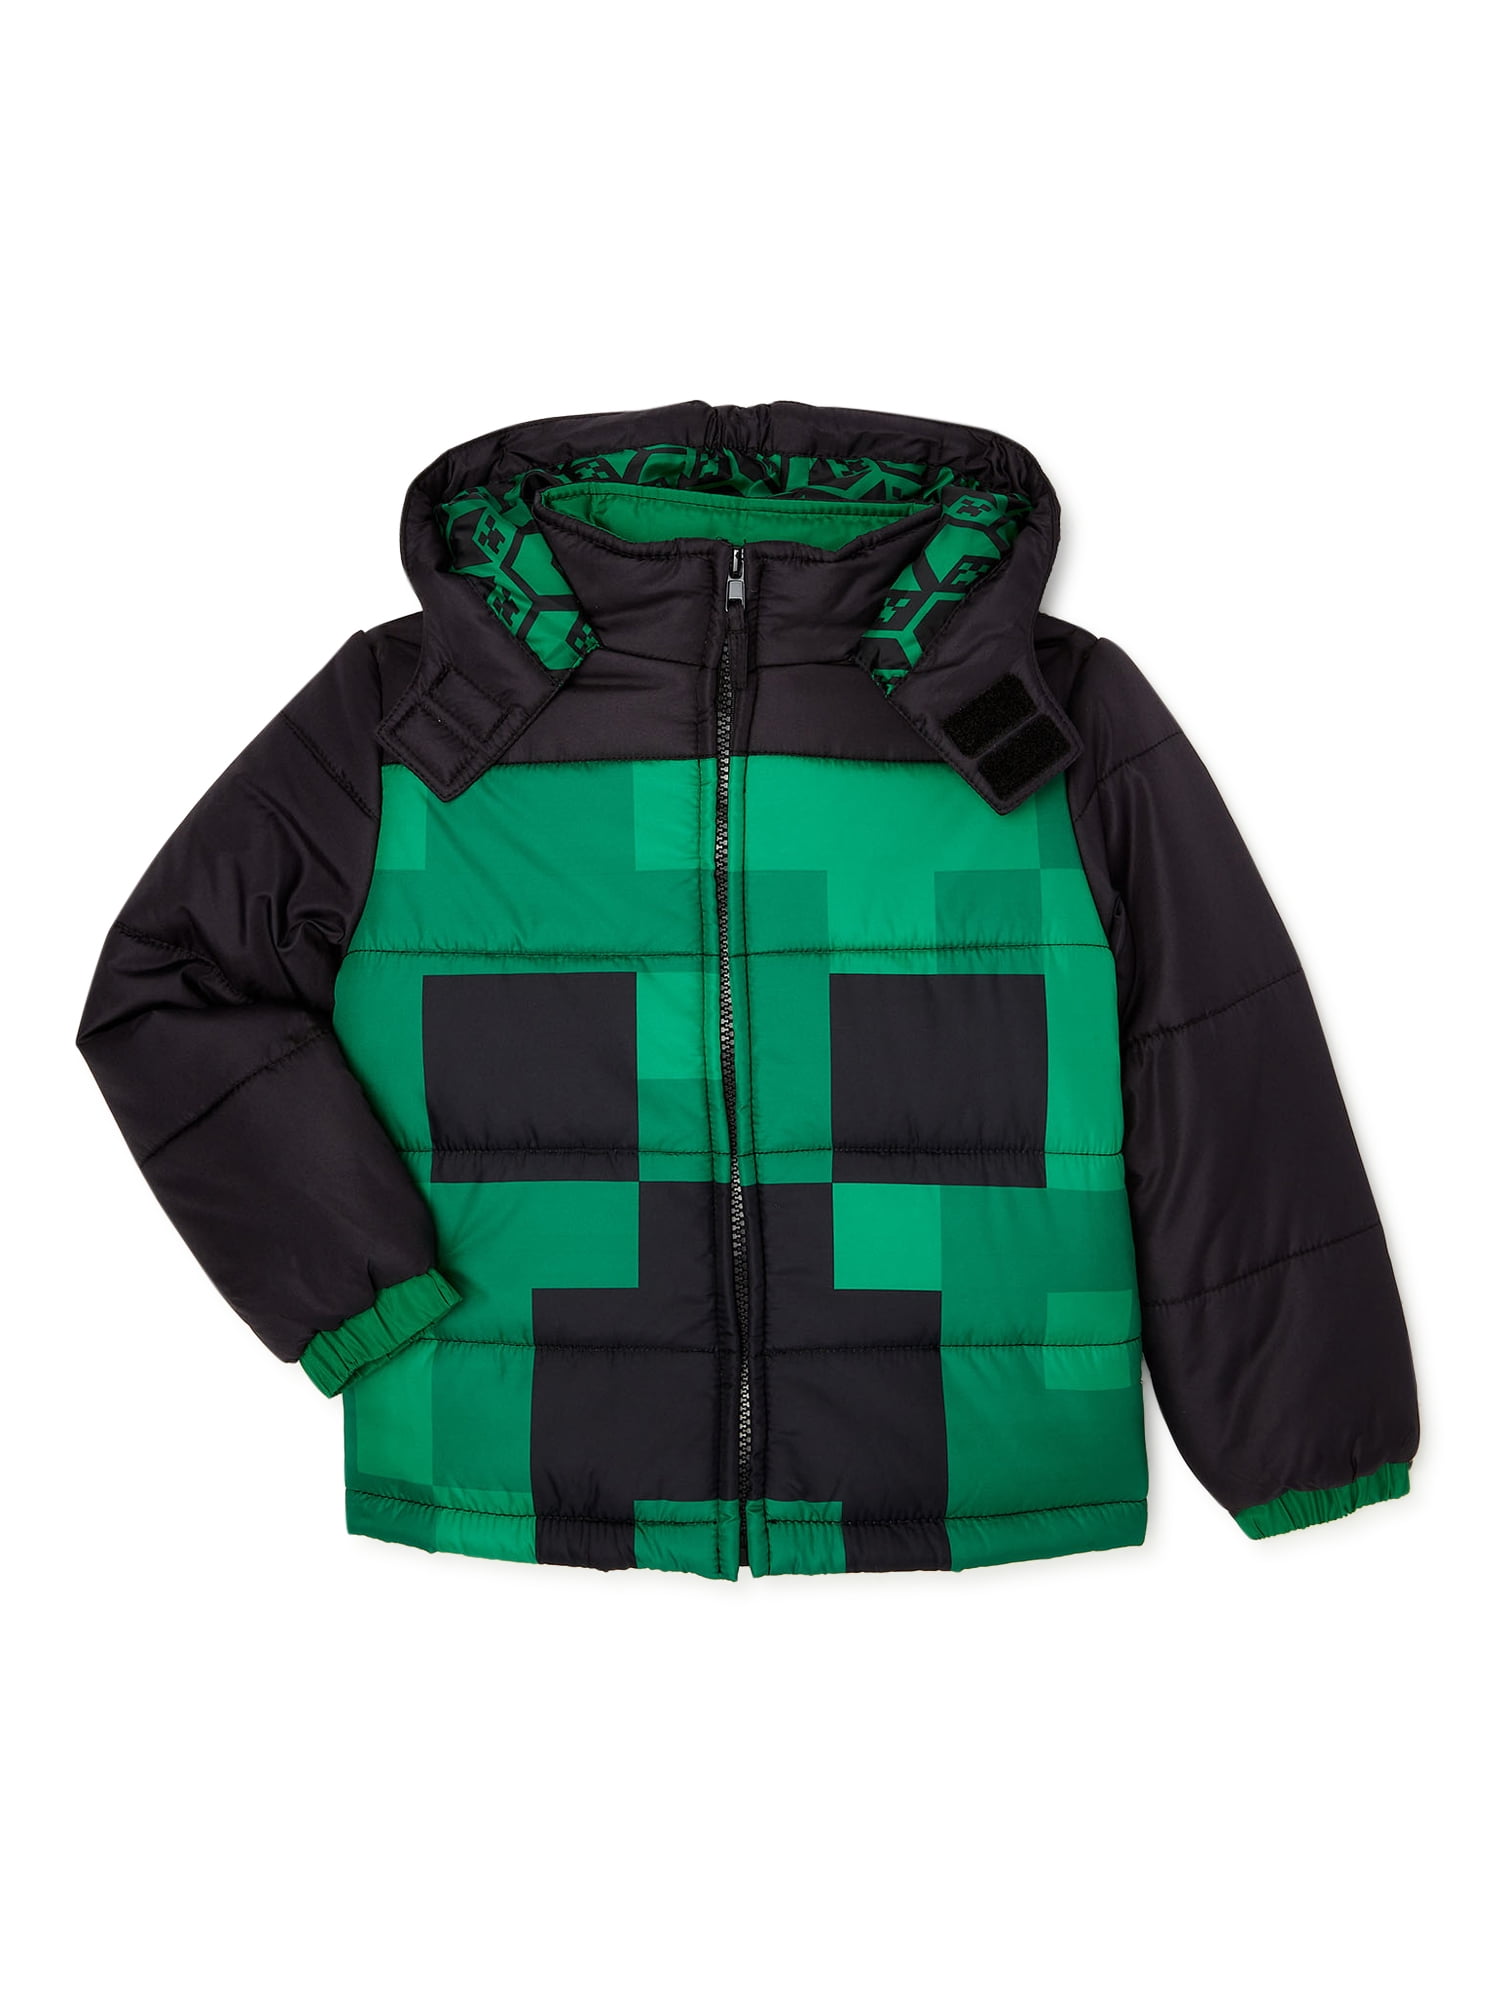 Boys Minecraft Warm Winter Puffer with Hood Jacket Coat 